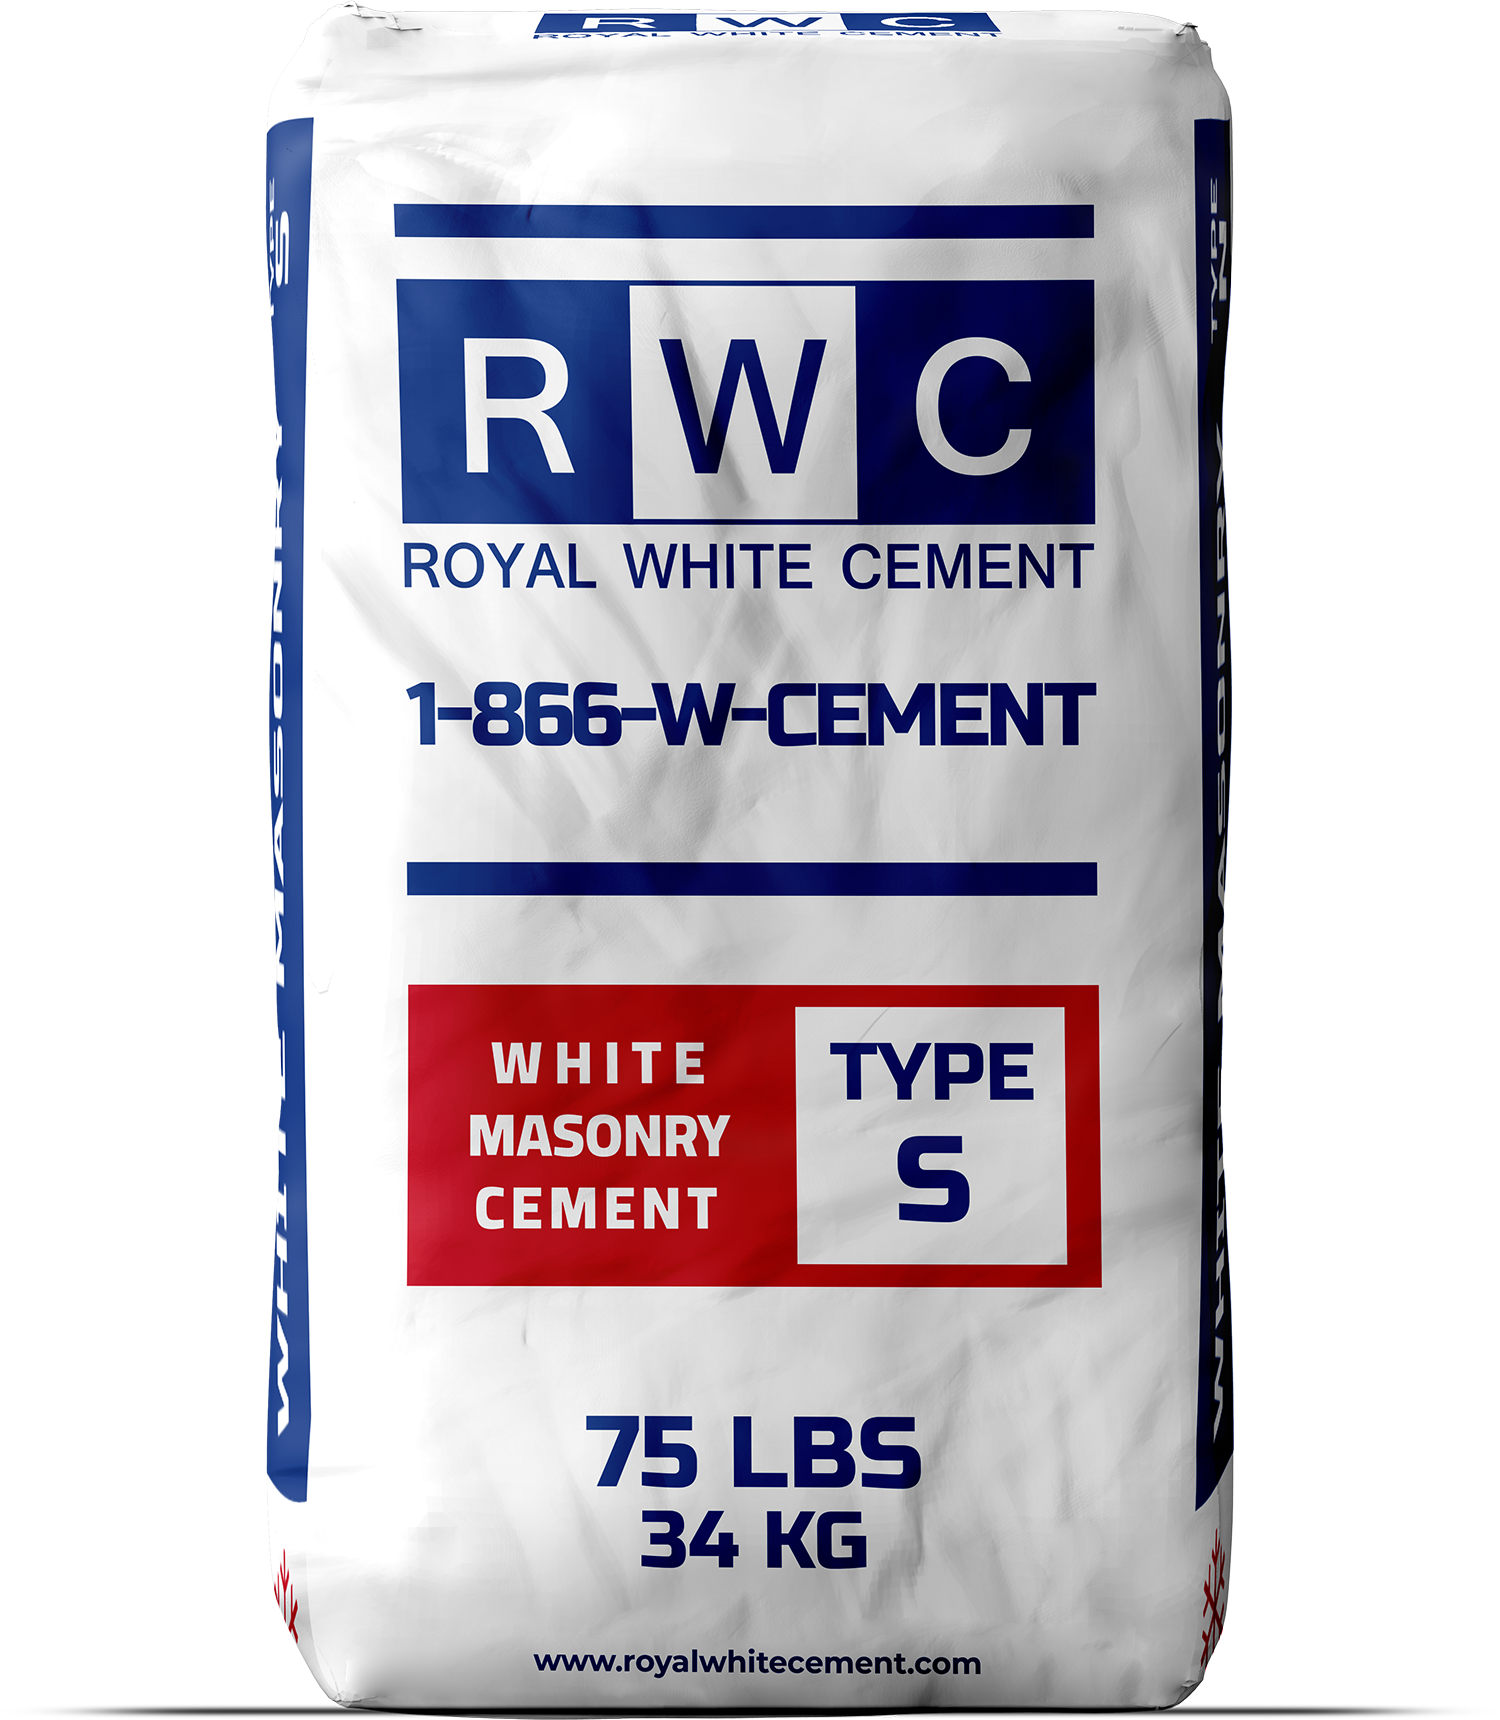 Royal White Cement - White Masonry Cement Type S